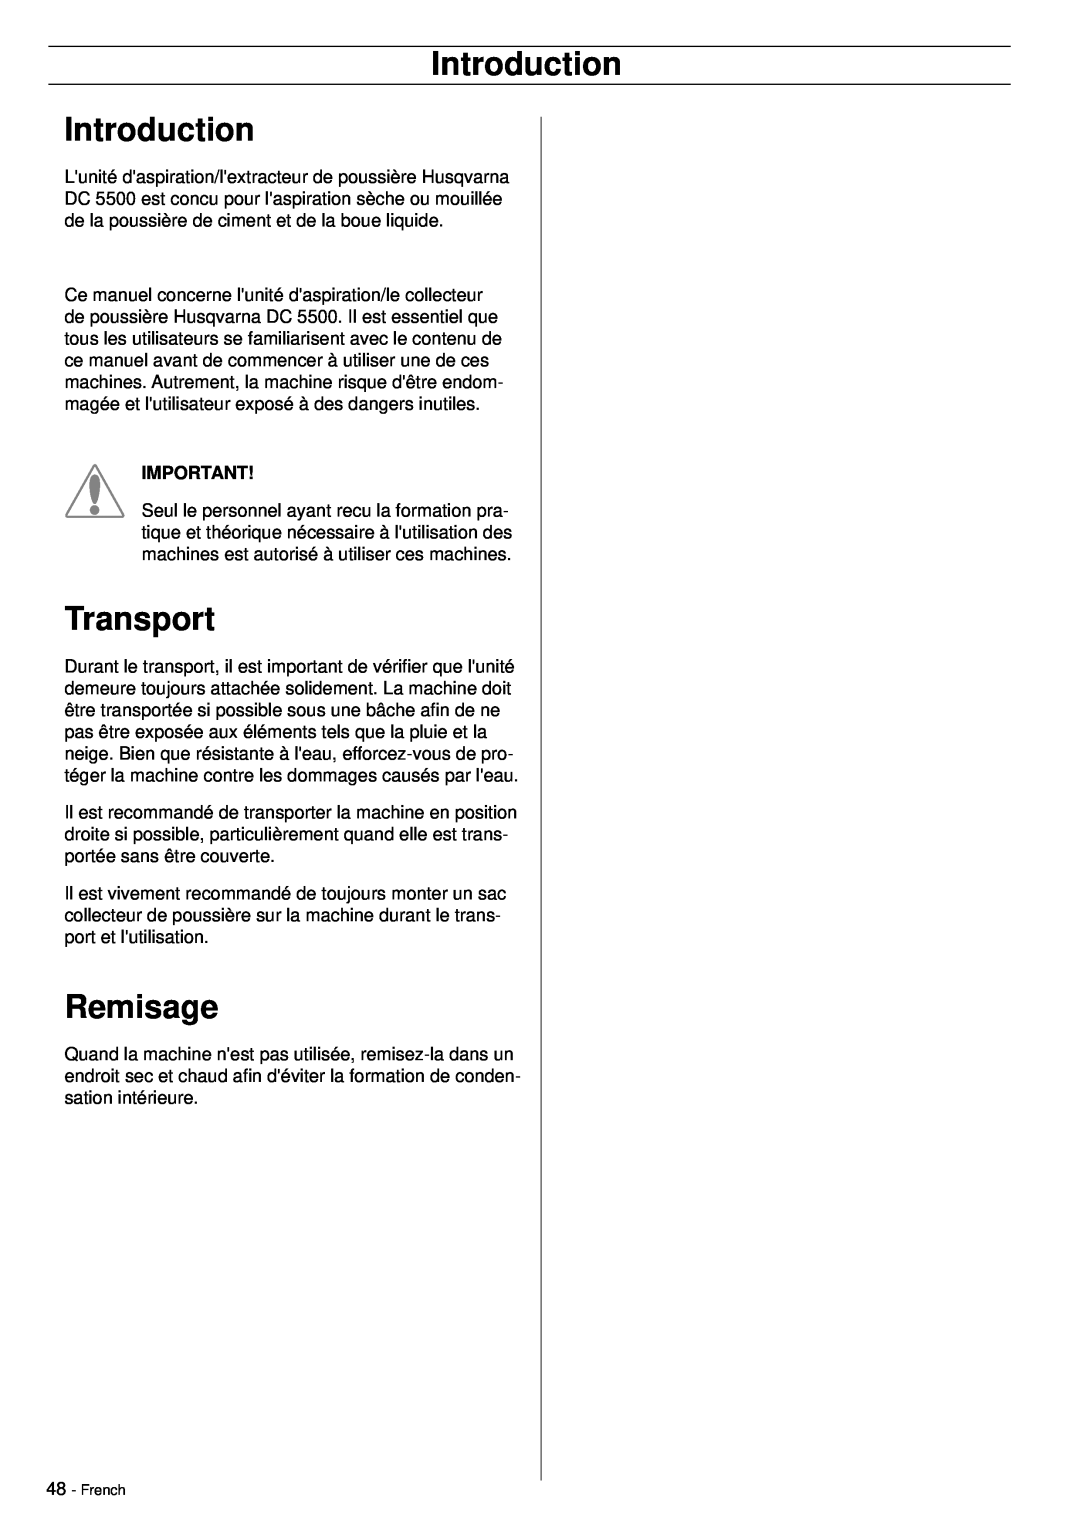 Husqvarna DC5500 manuel dutilisation Remisage, Introduction Introduction, Transport, French 